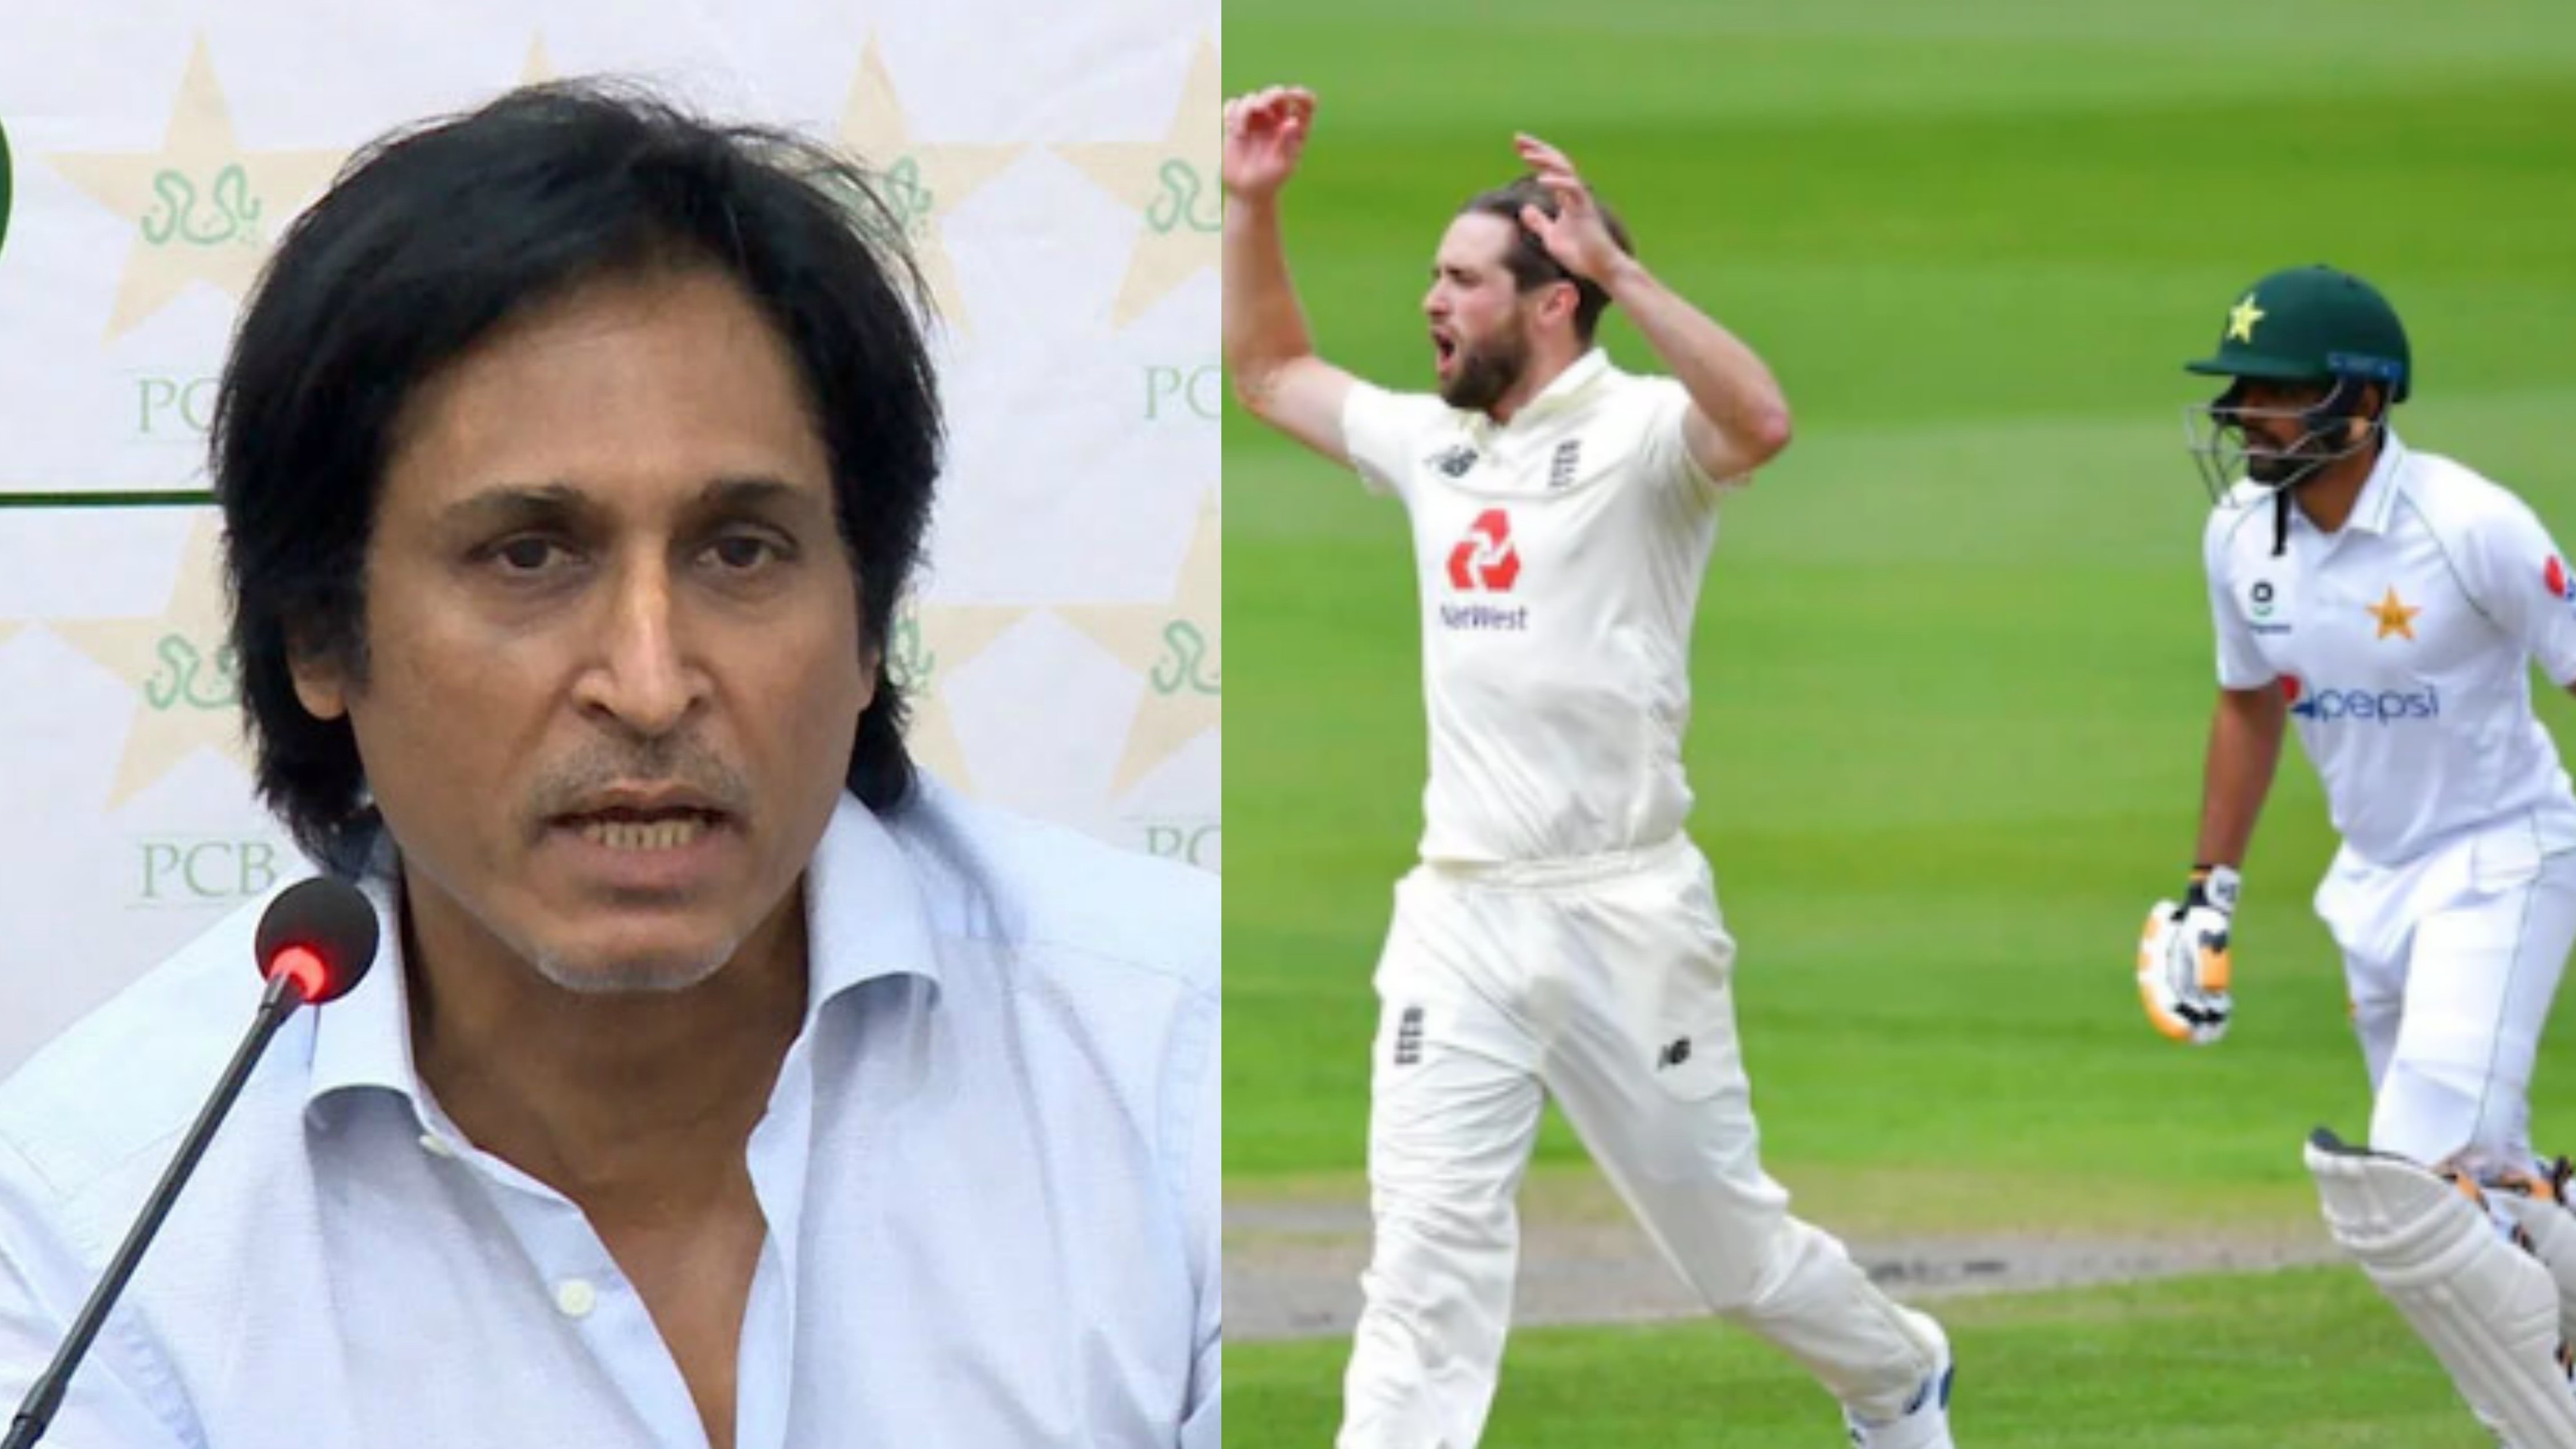 ENG v PAK 2020: Ramiz Raja reveals how Pakistan lost the Manchester Test to England